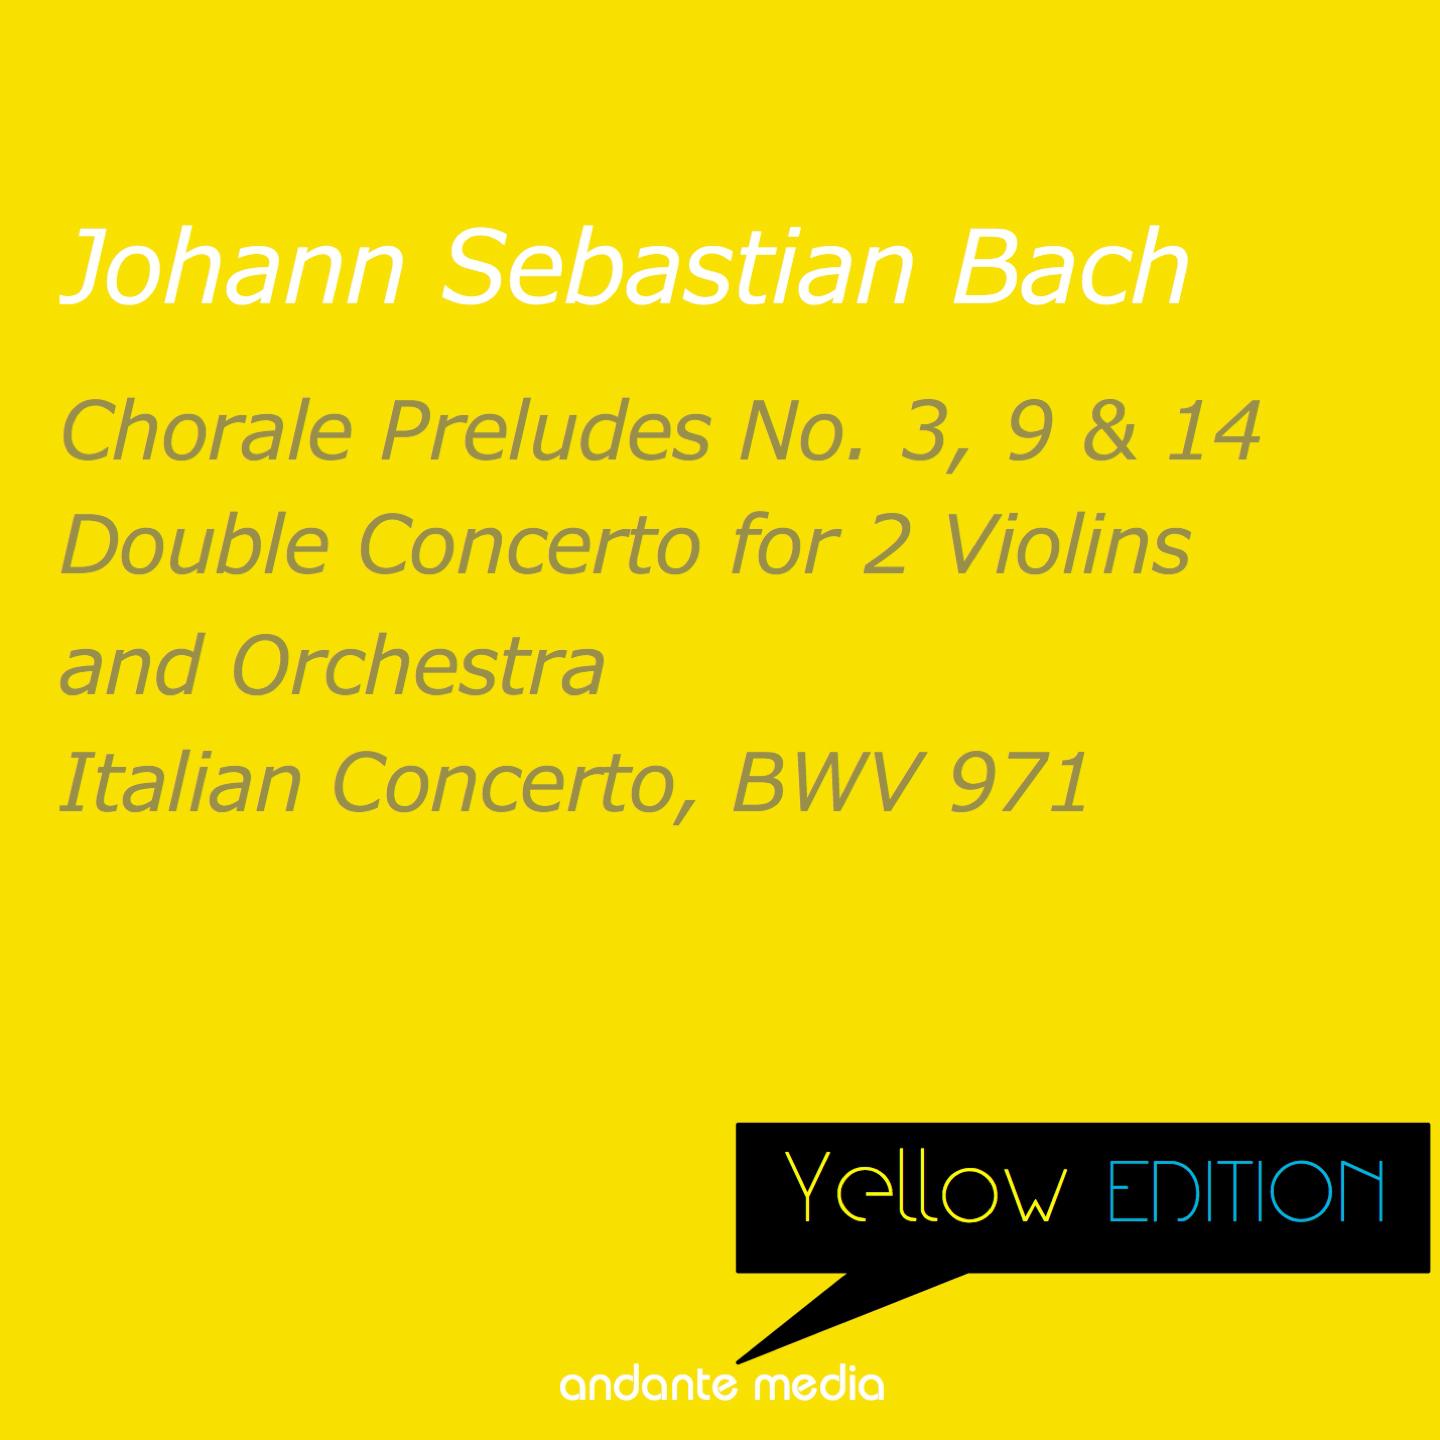 Yellow Edition - Bach: 18 Chorale Preludes No. 3, 9, 14 & Italian Concerto, BWV 971